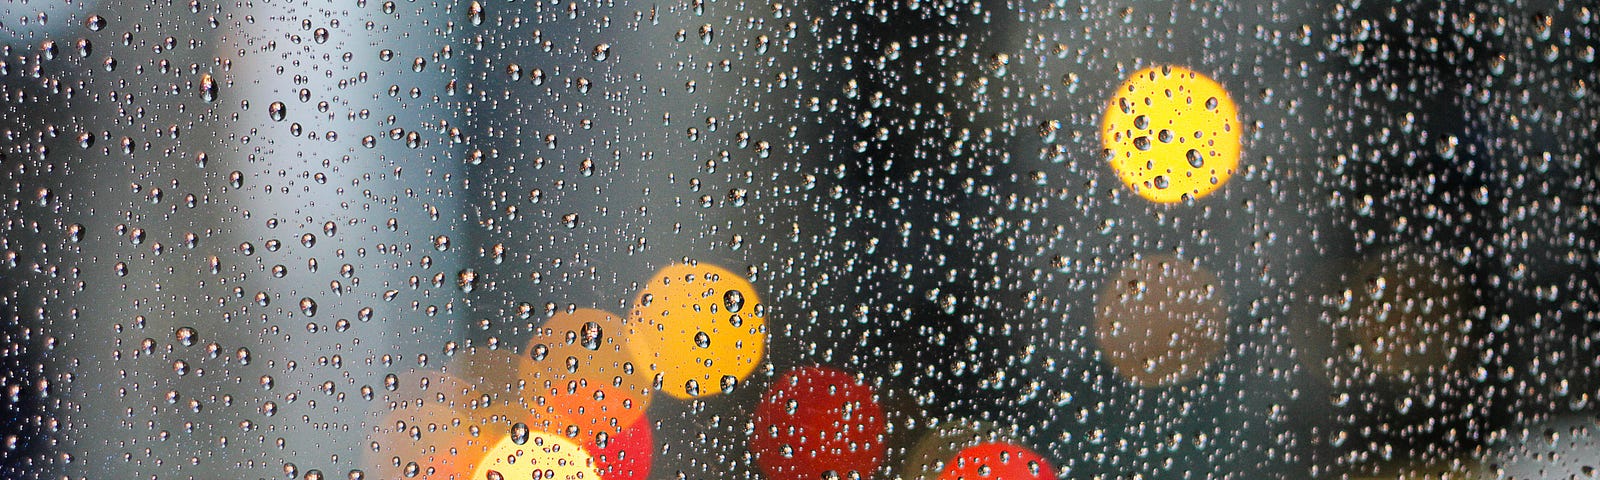 Spotty colored lights through a rainy window